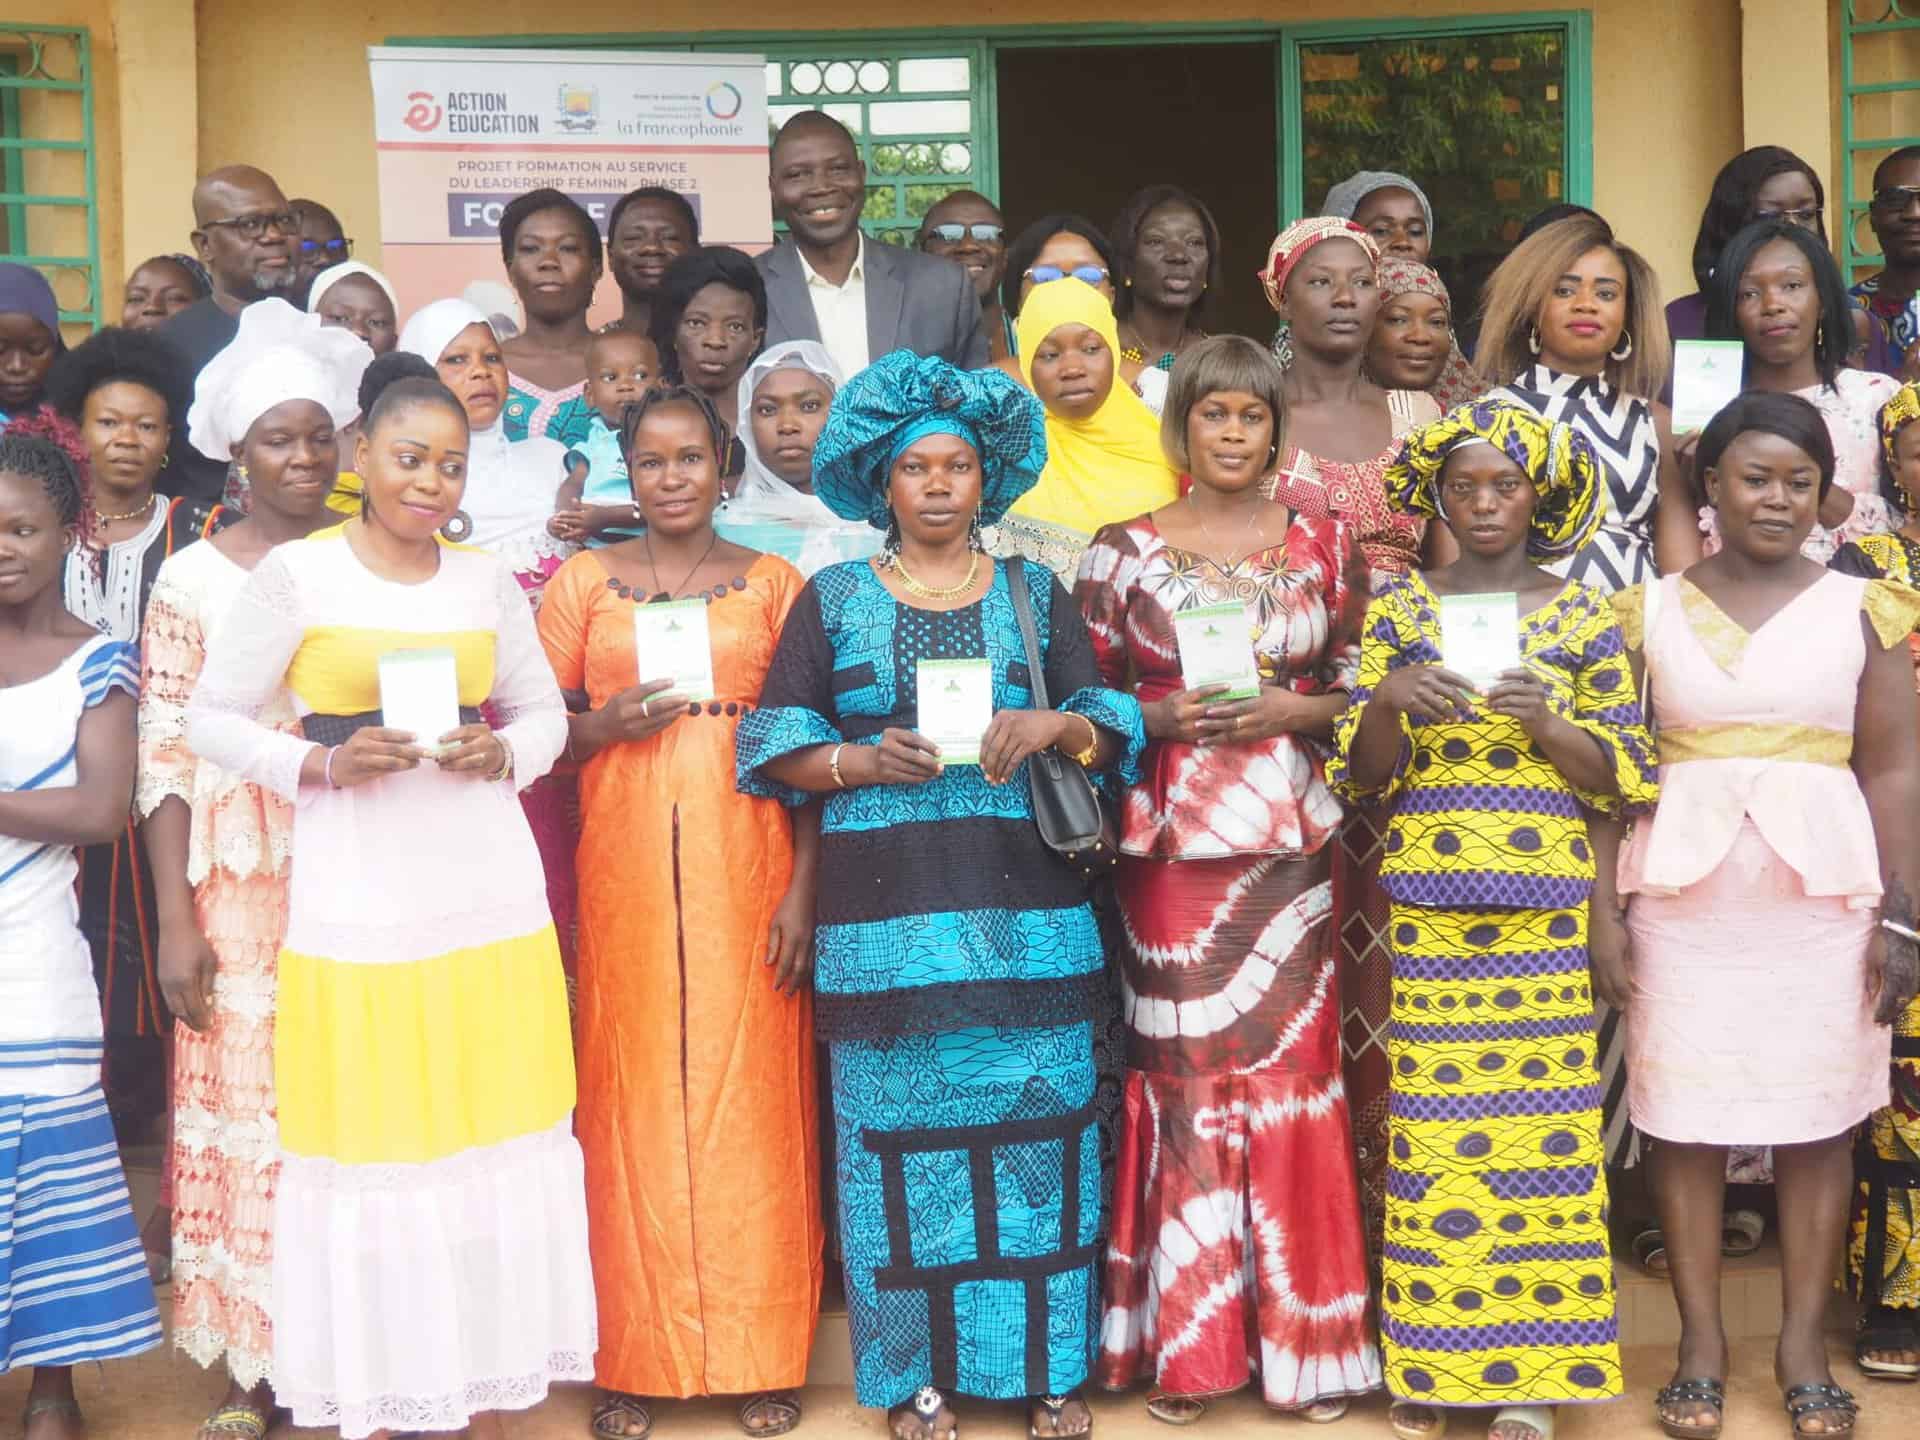 La promotion de l’entrepreneuriat féminin au Burkina Faso